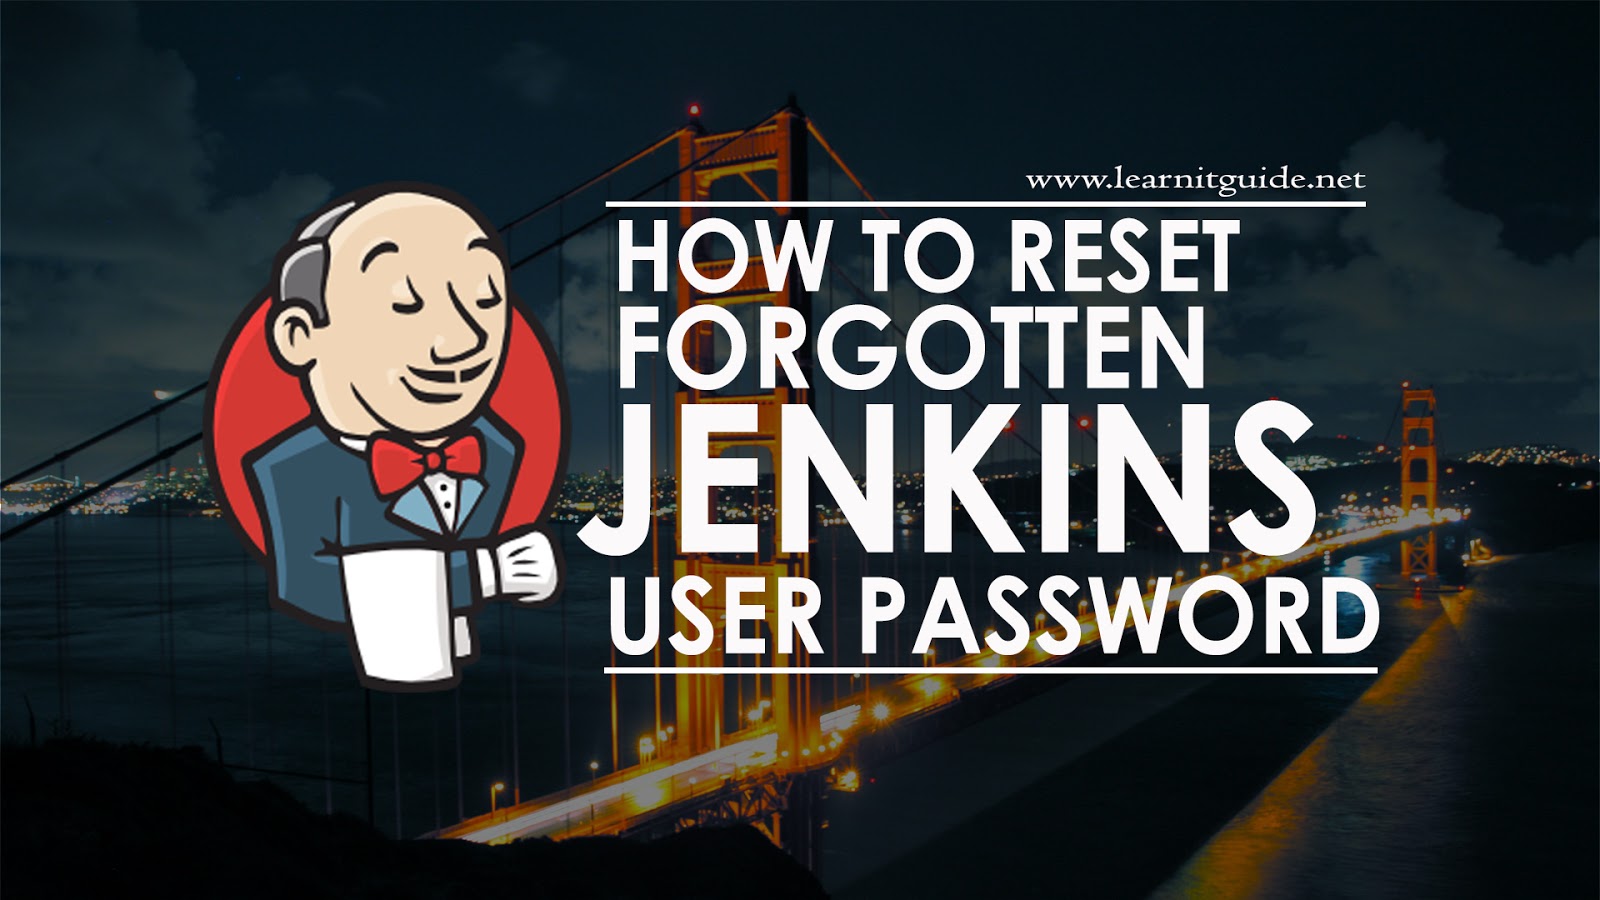 generate hash password